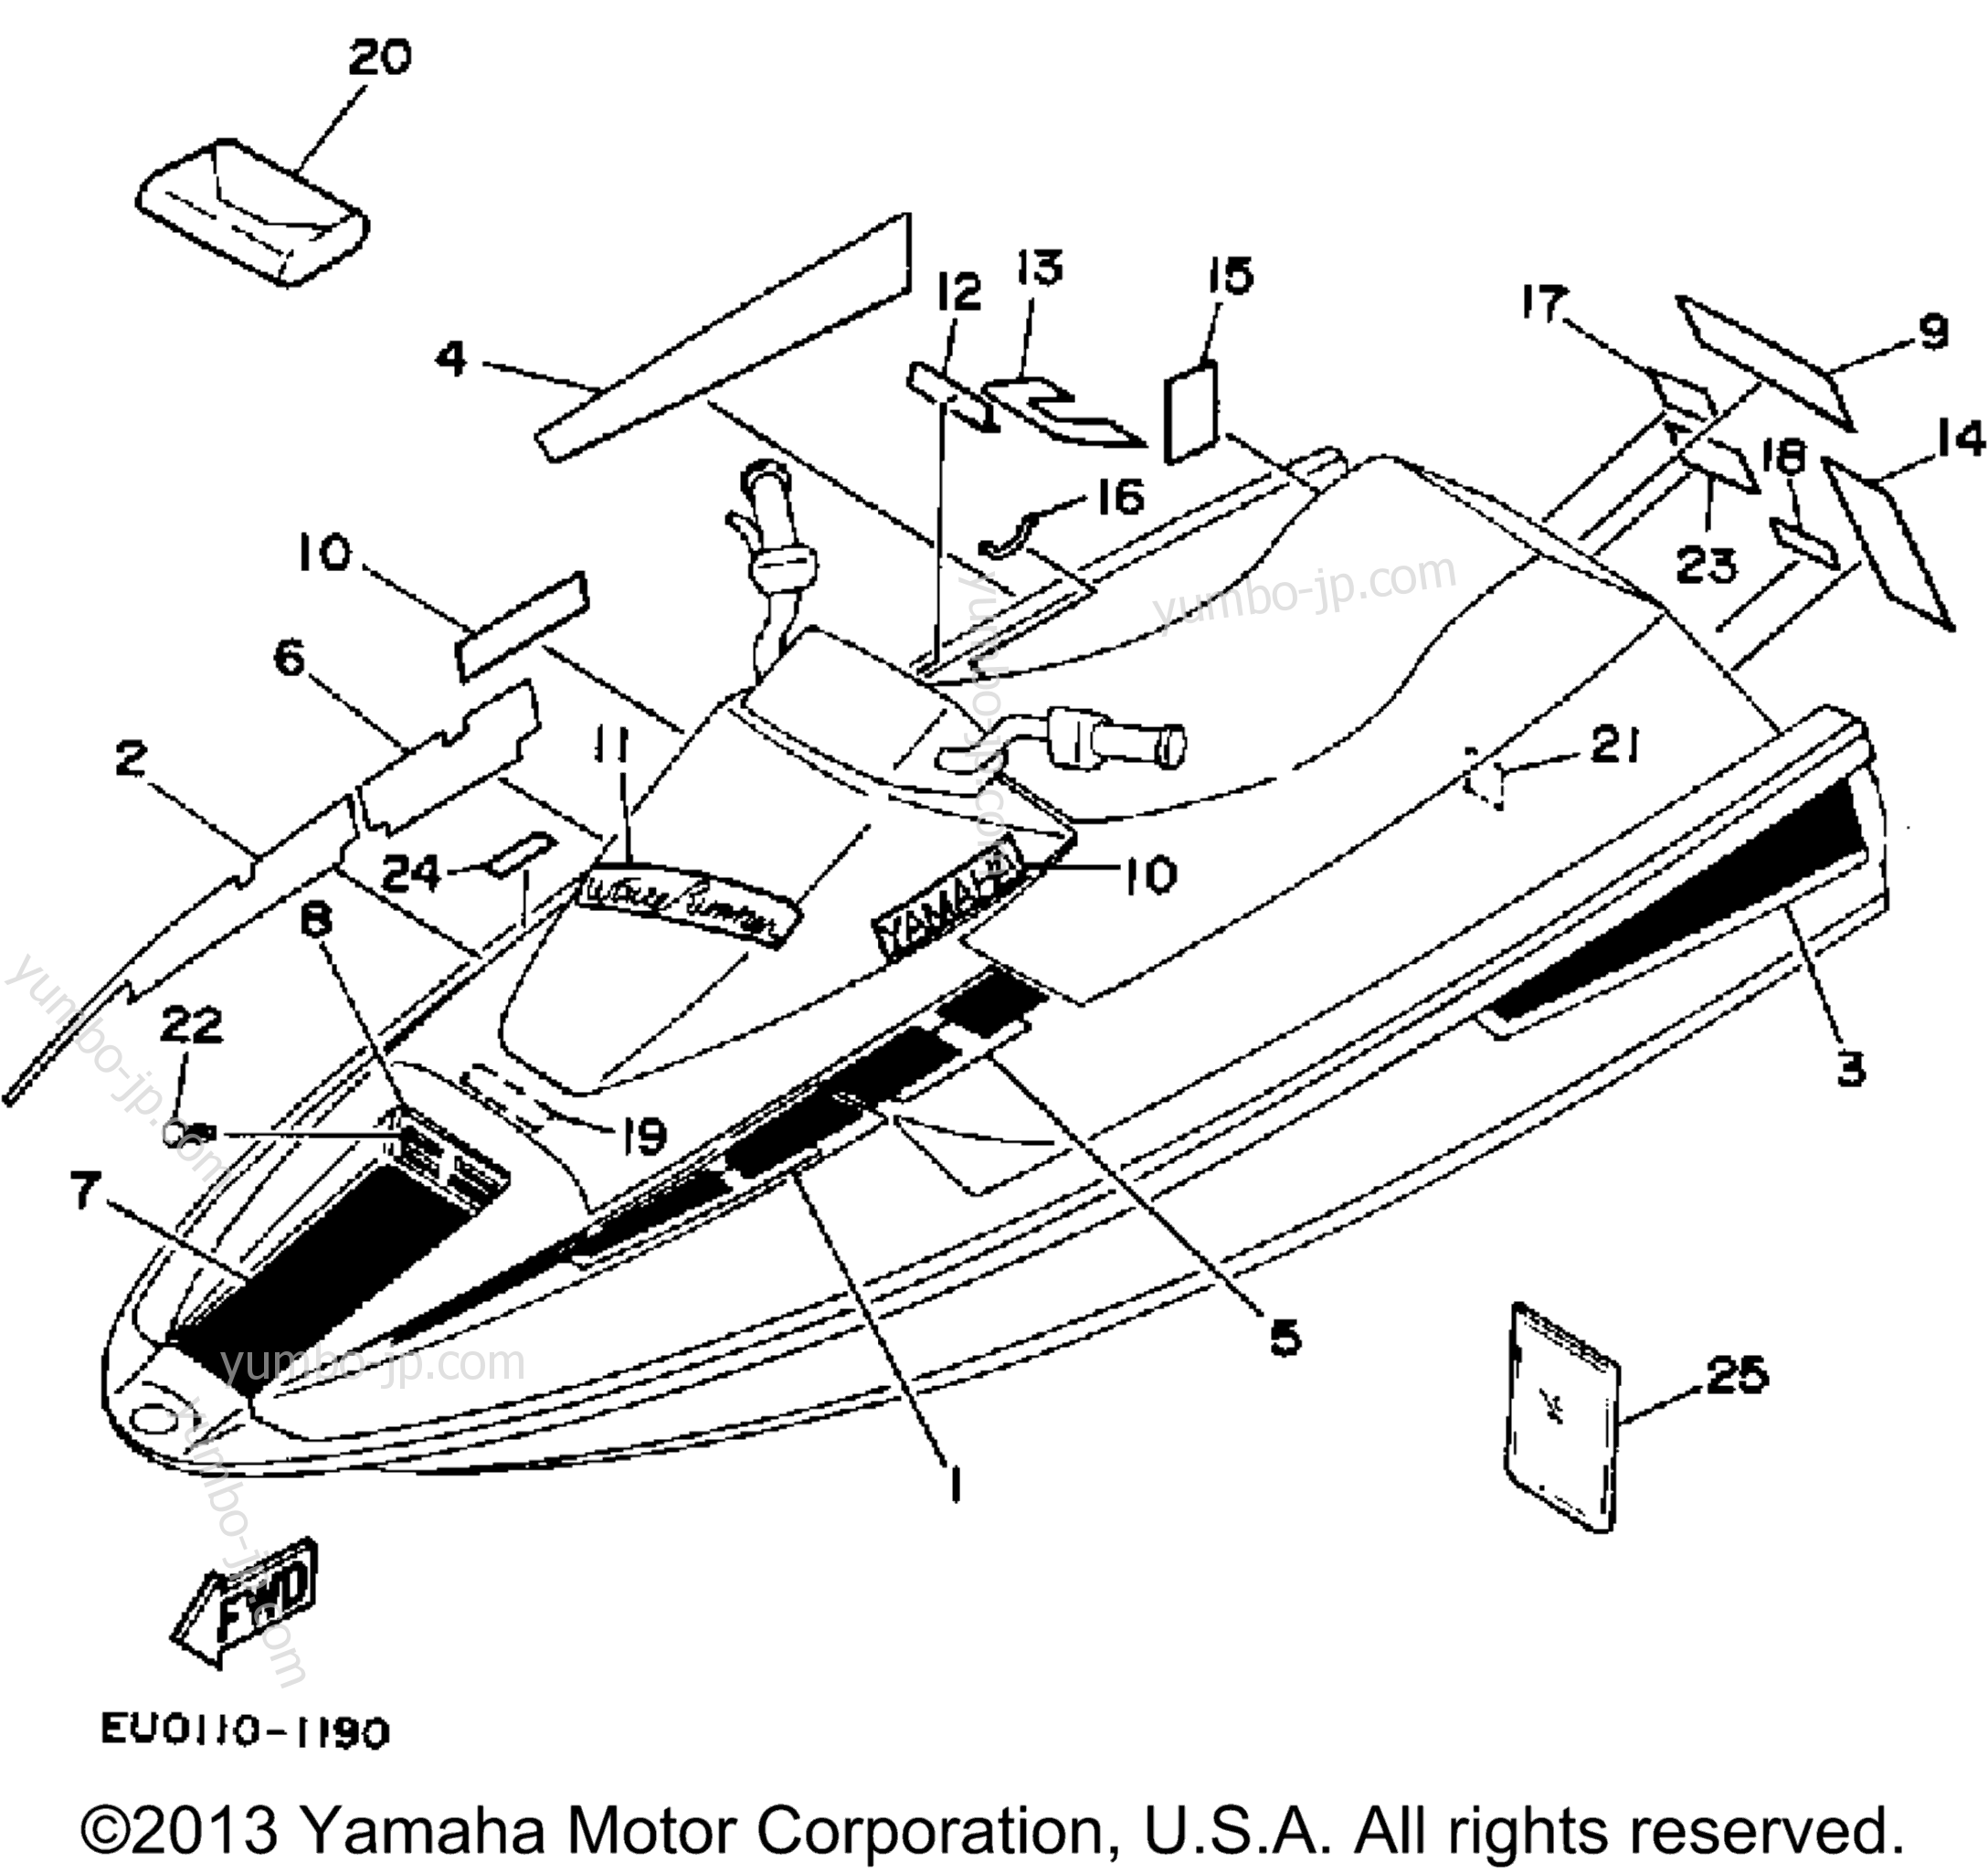 Graphic - Tool для гидроциклов YAMAHA WAVE RUNNER (WR500P) 1991 г.